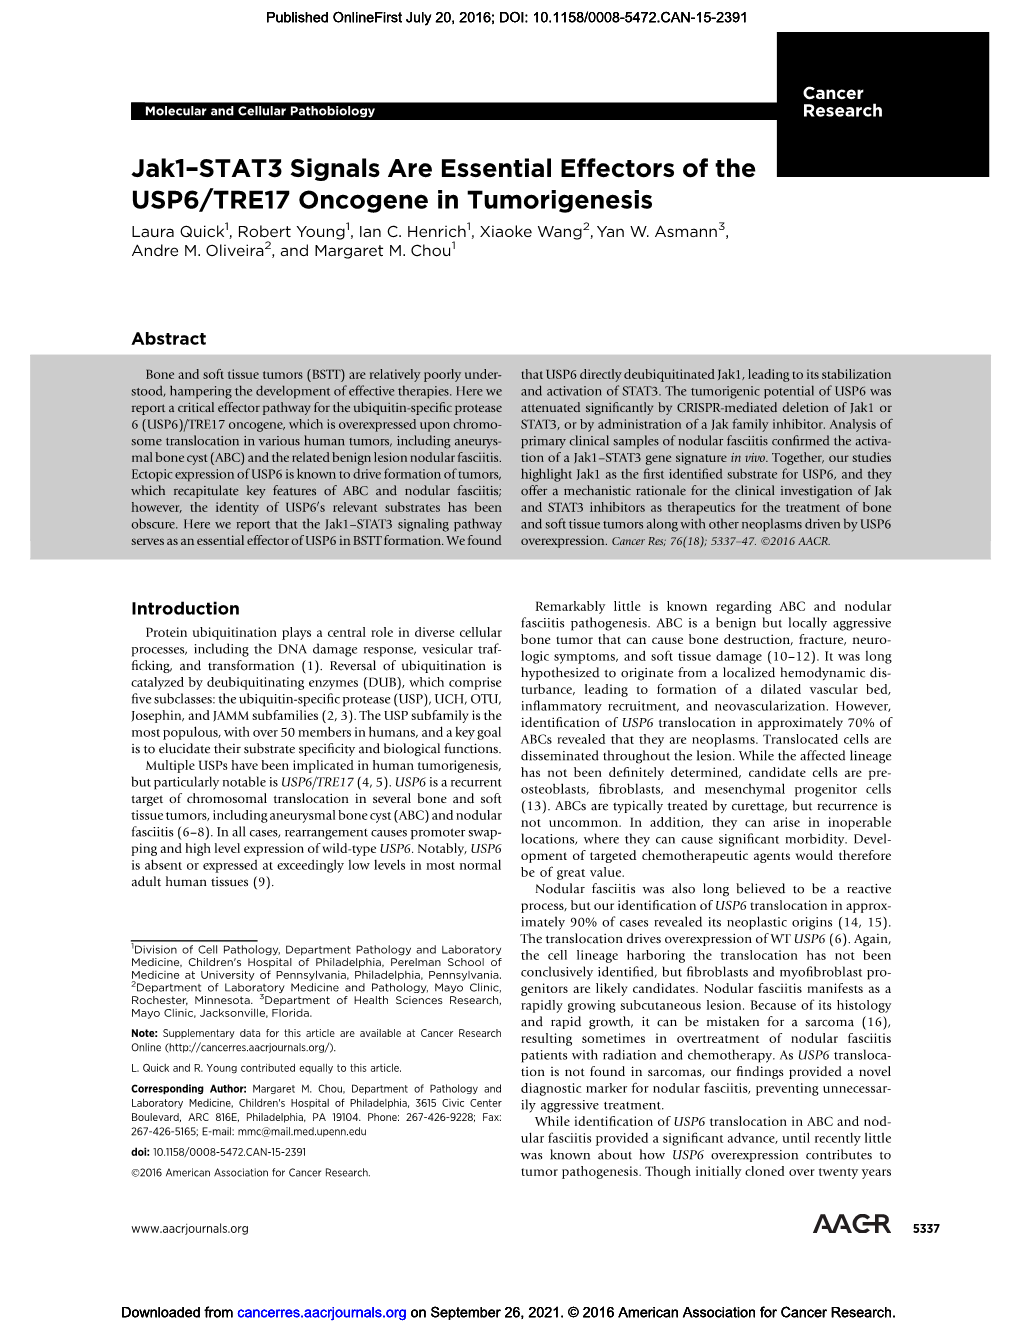 Jak1–STAT3 Signals Are Essential Effectors of the USP6/TRE17 Oncogene in Tumorigenesis Laura Quick1, Robert Young1, Ian C